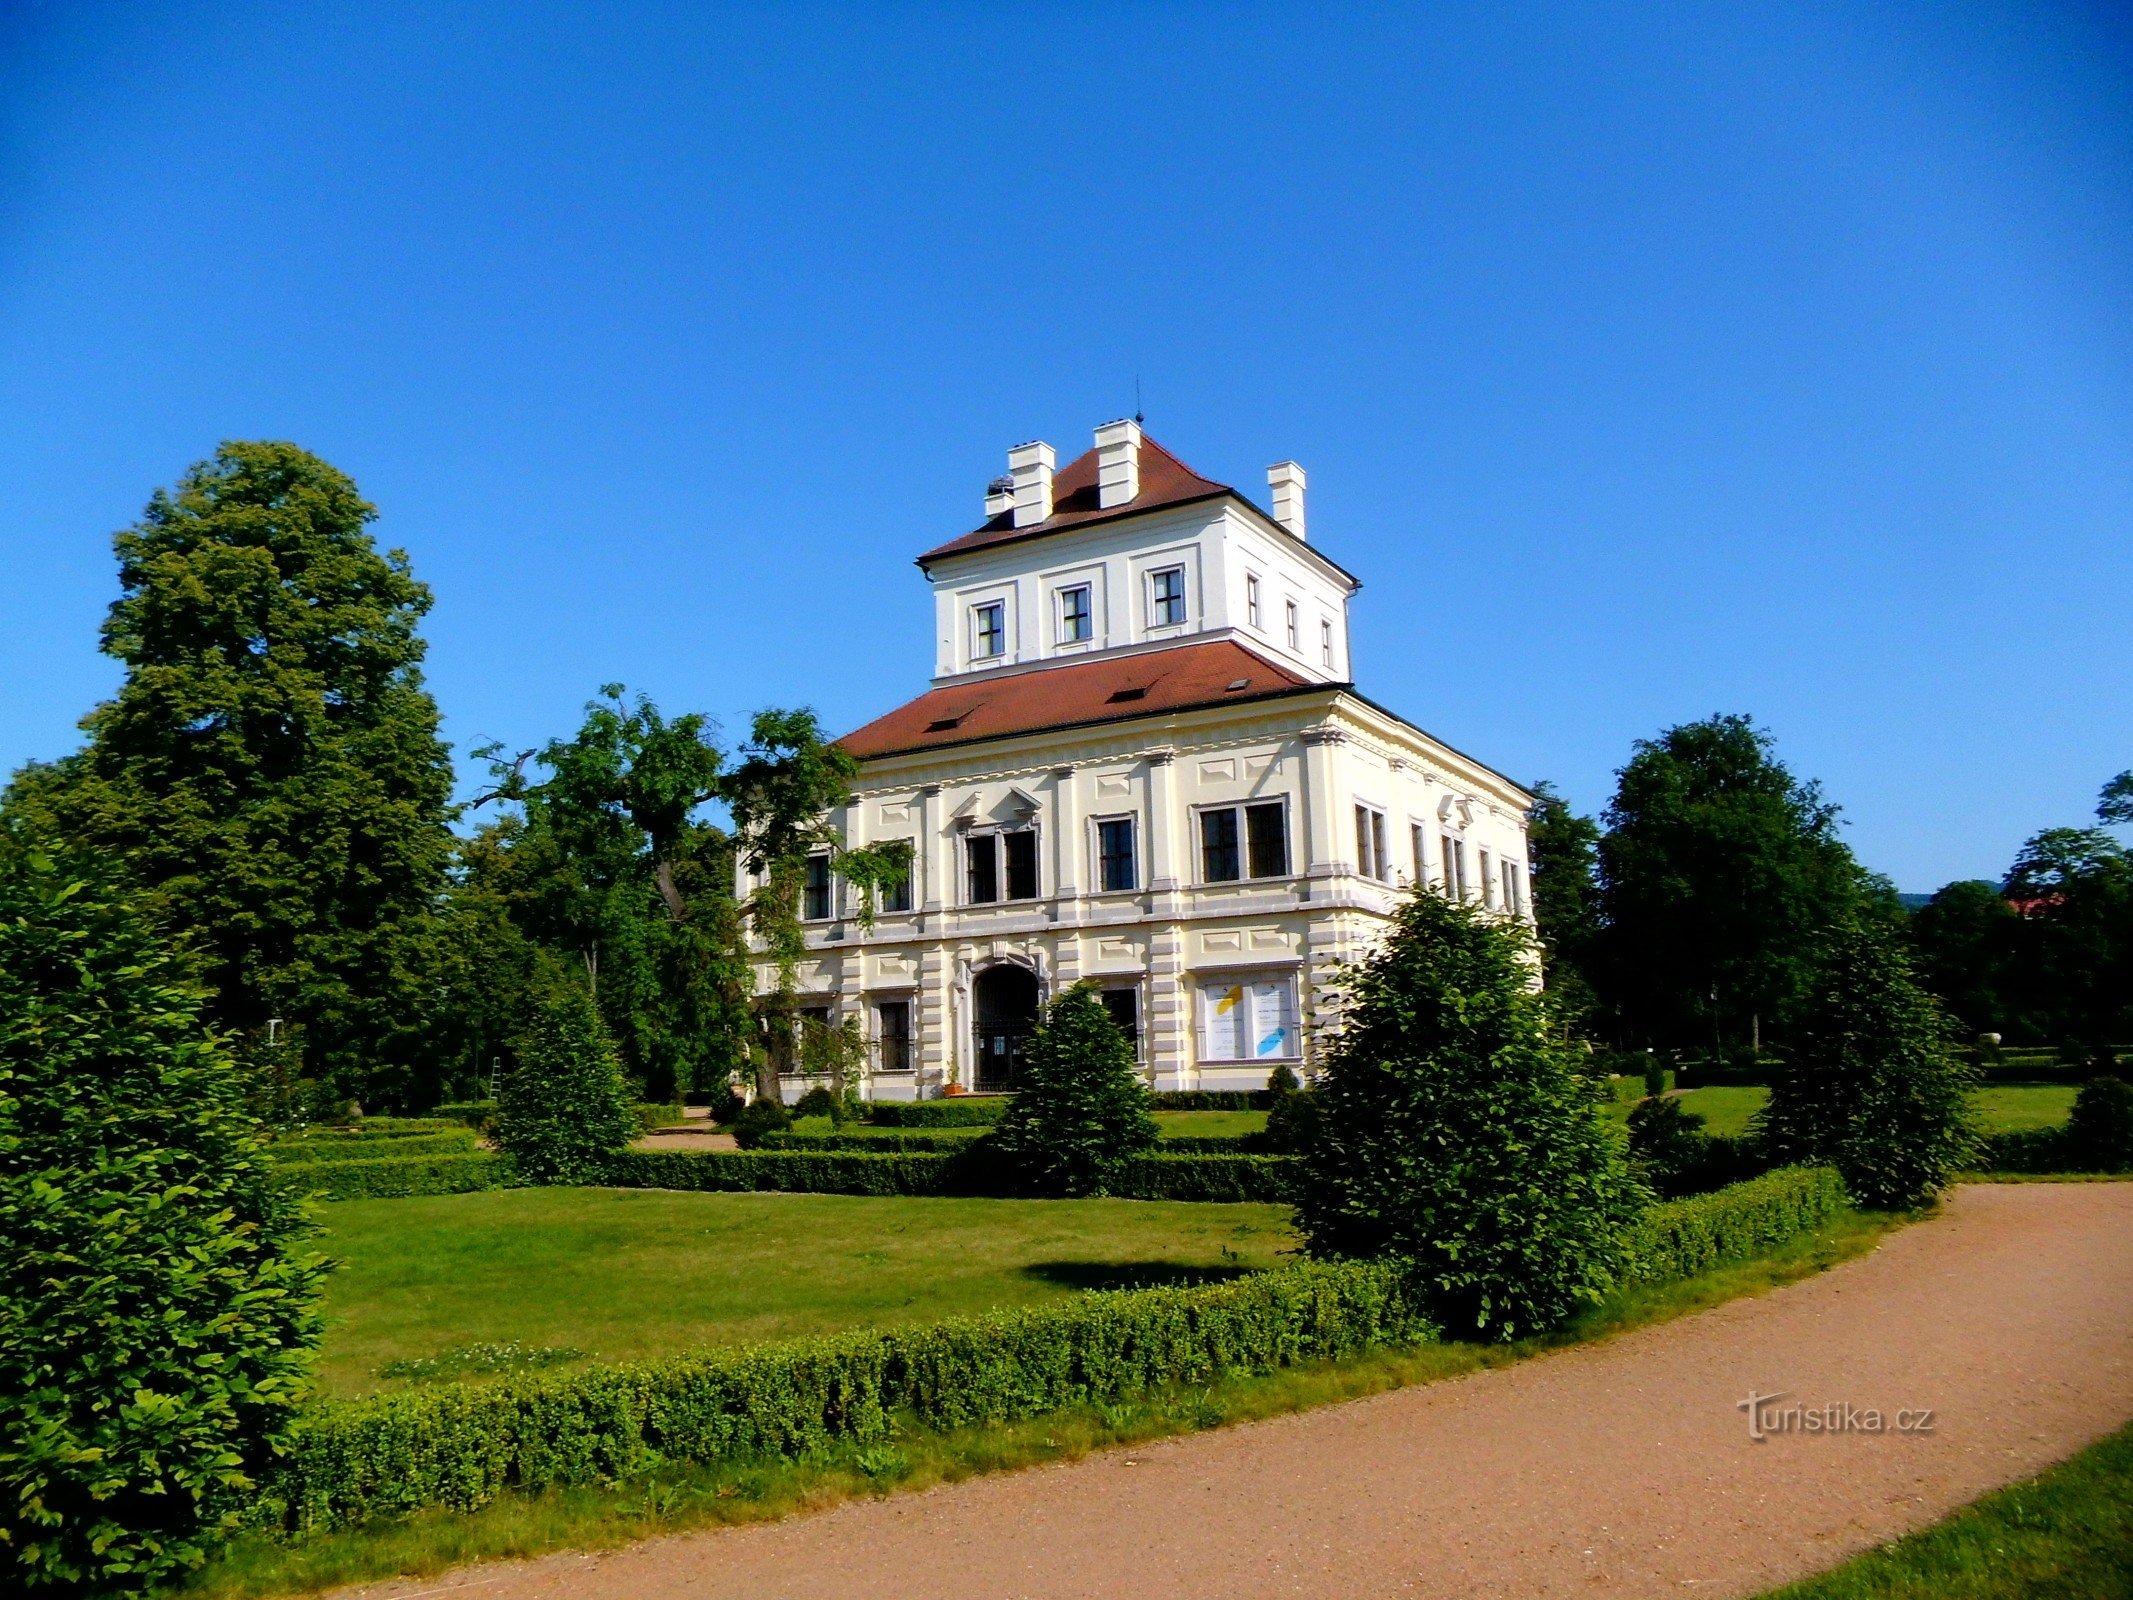 Kävely Ostrov nad Ohřín linnapuiston läpi